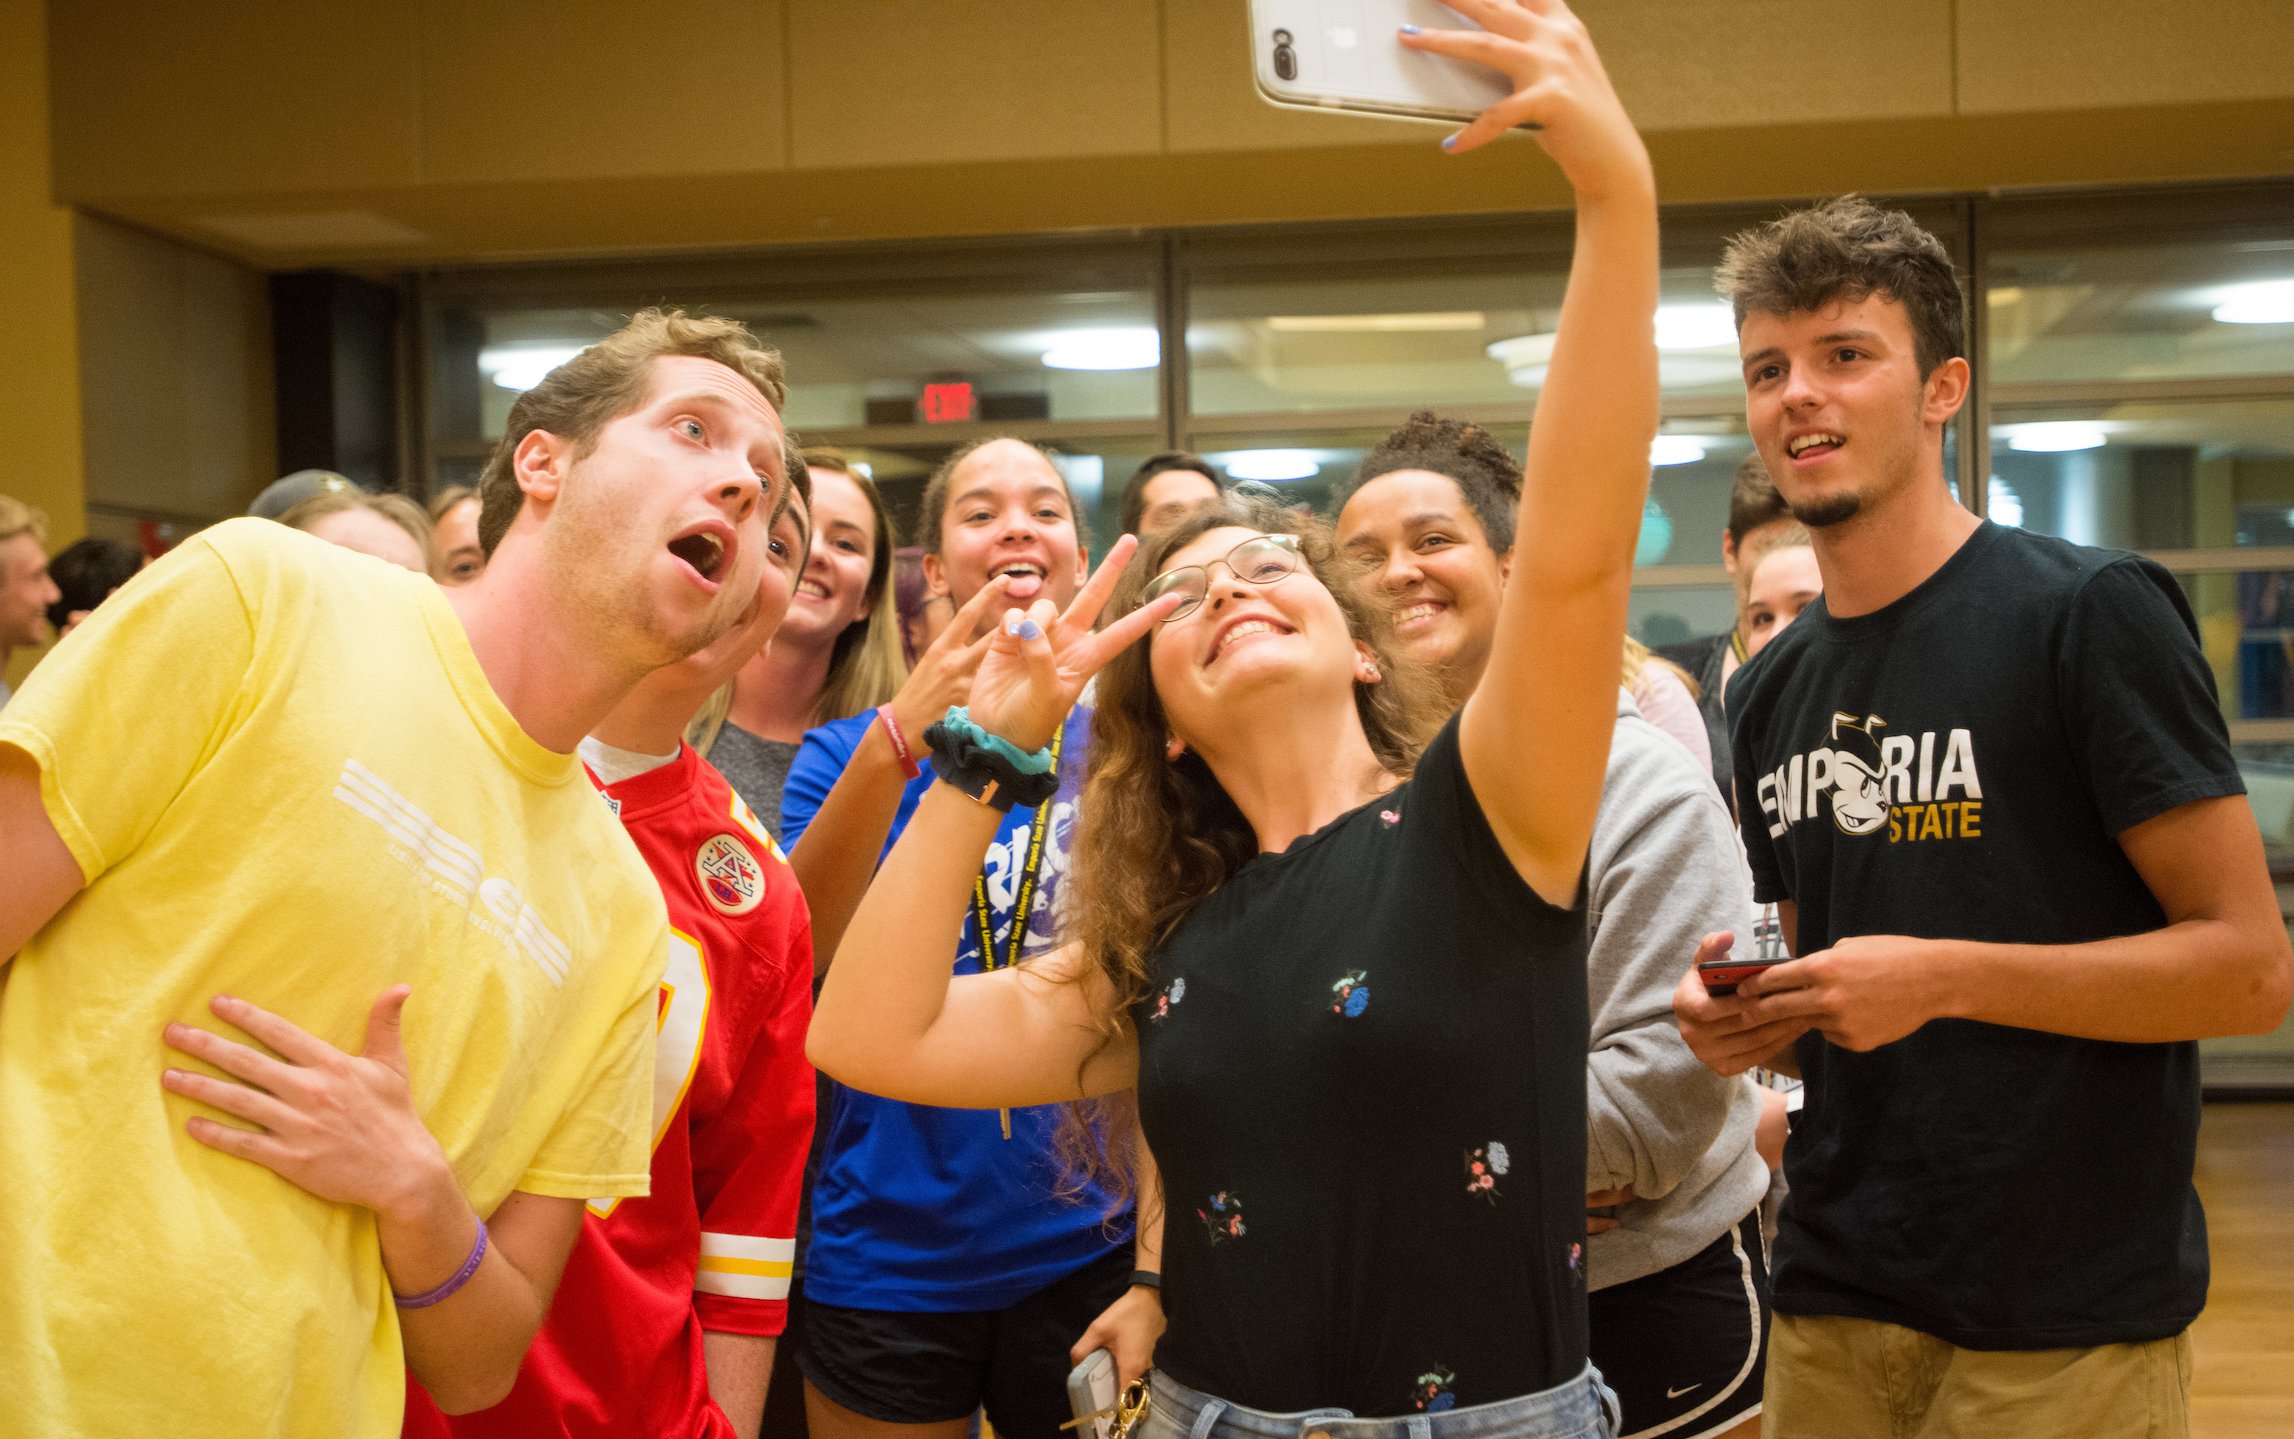 Students Taking Selfie